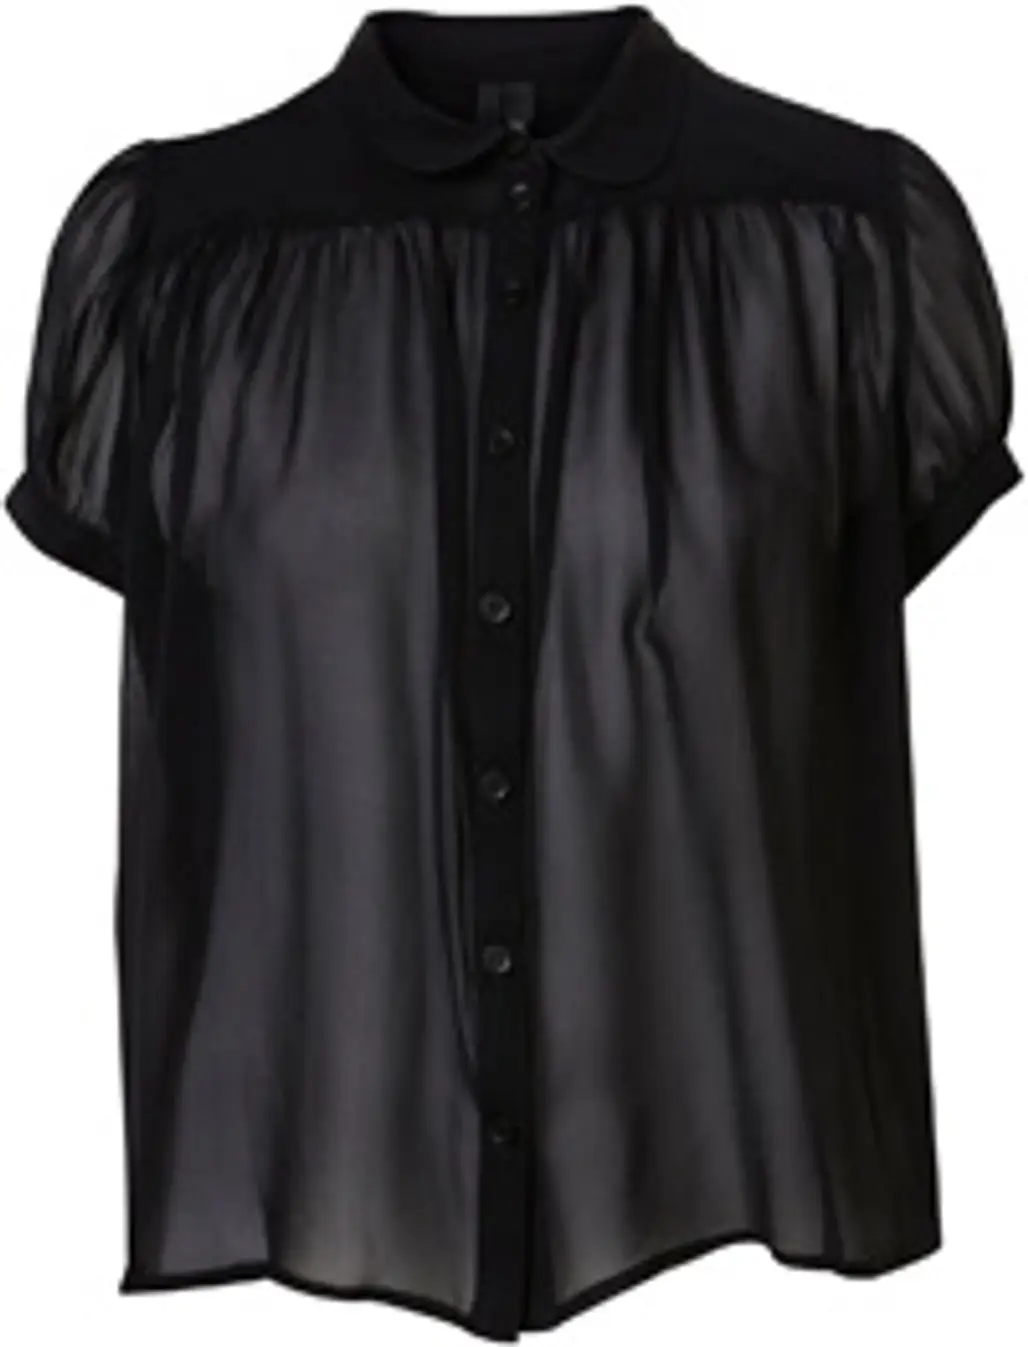 Topshop Black Silk Swing Shirt